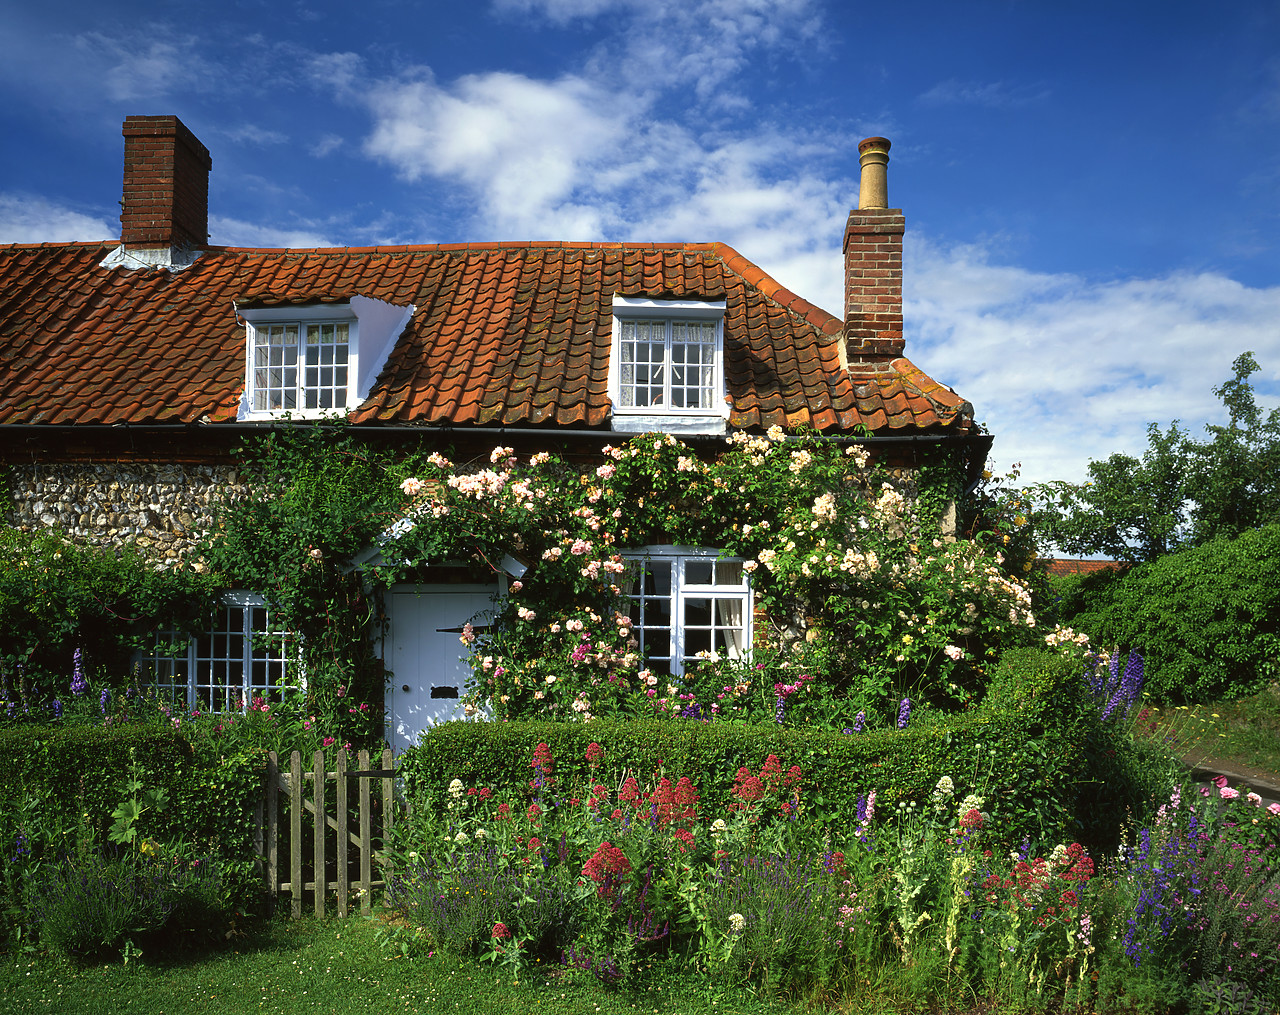 #040156-1 - Flint Cottage & Garden, Great Walsingham, Norfolk, England